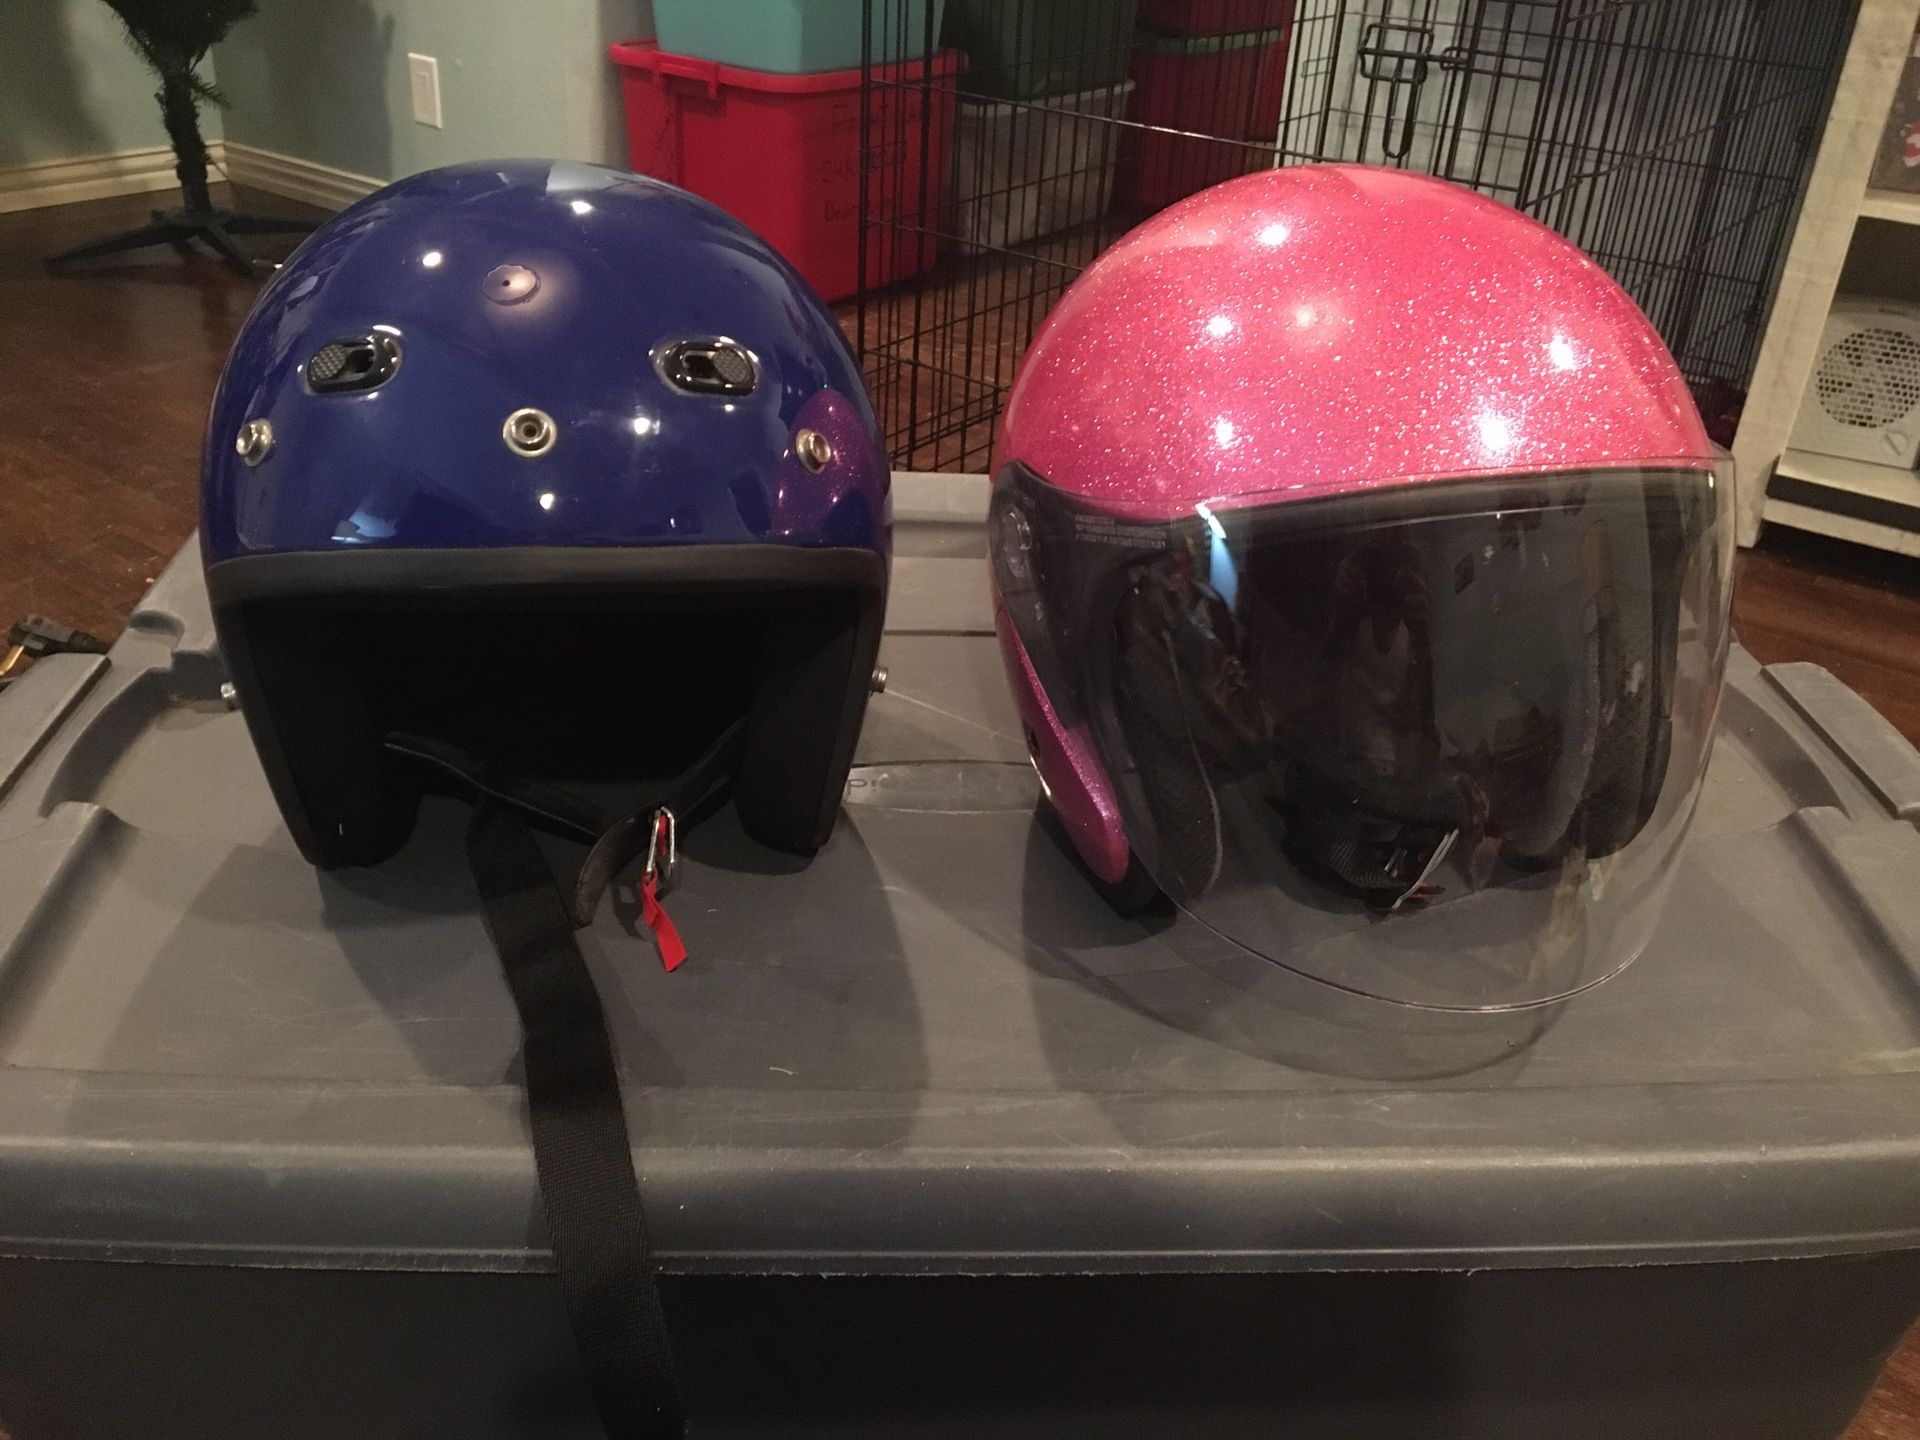 Kids helmets